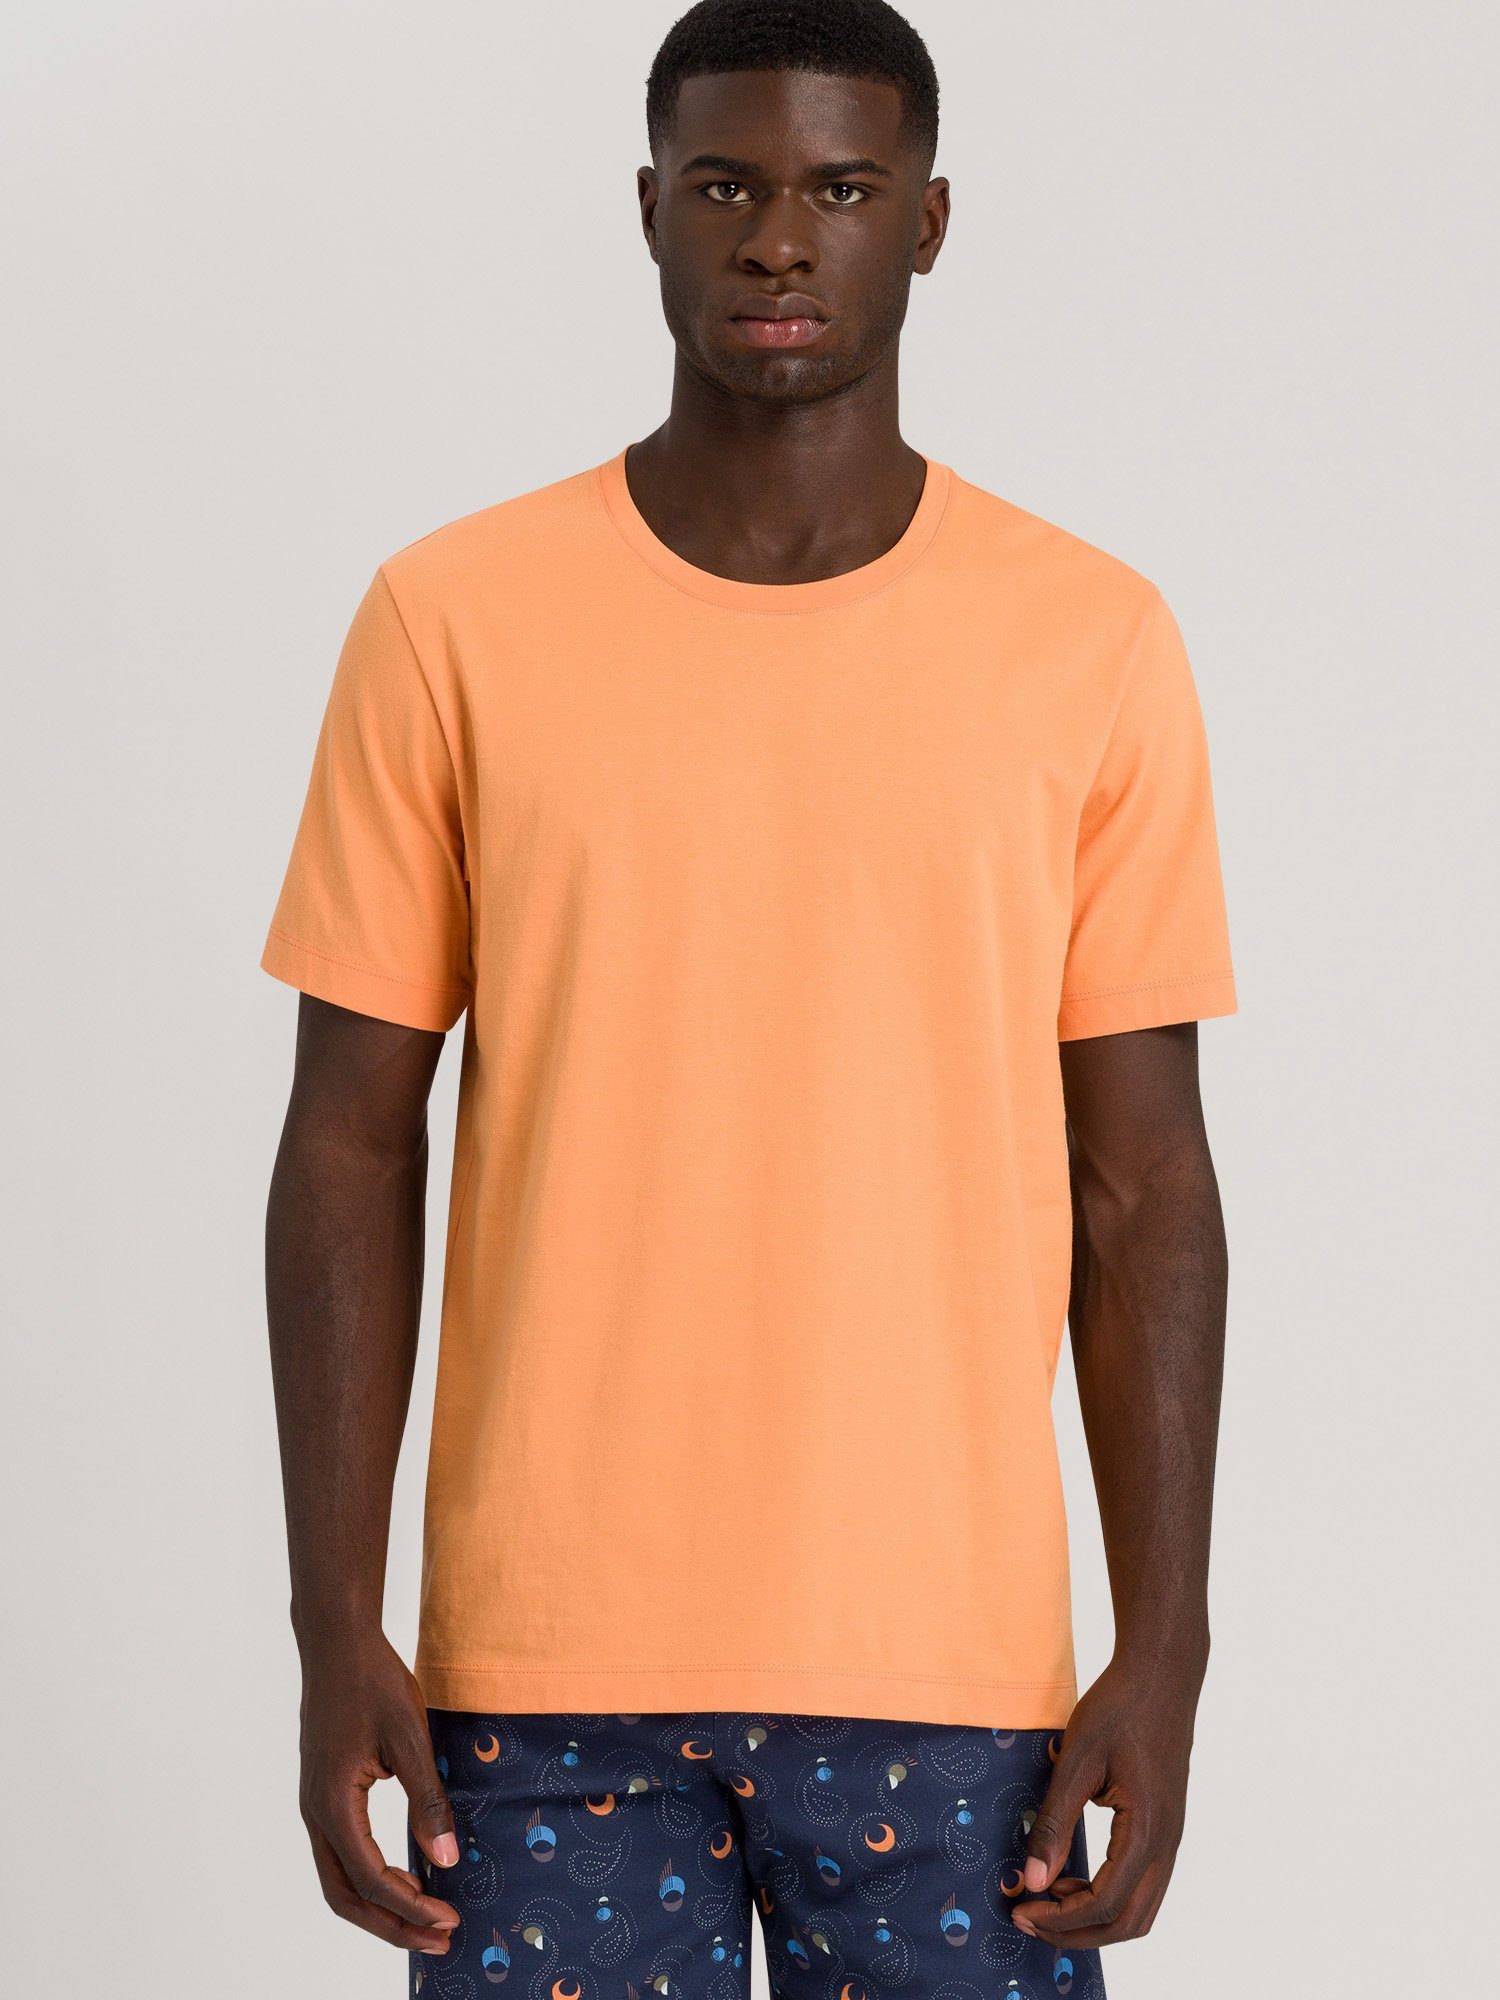 Hanro Shirts tangerine T-Shirt Living